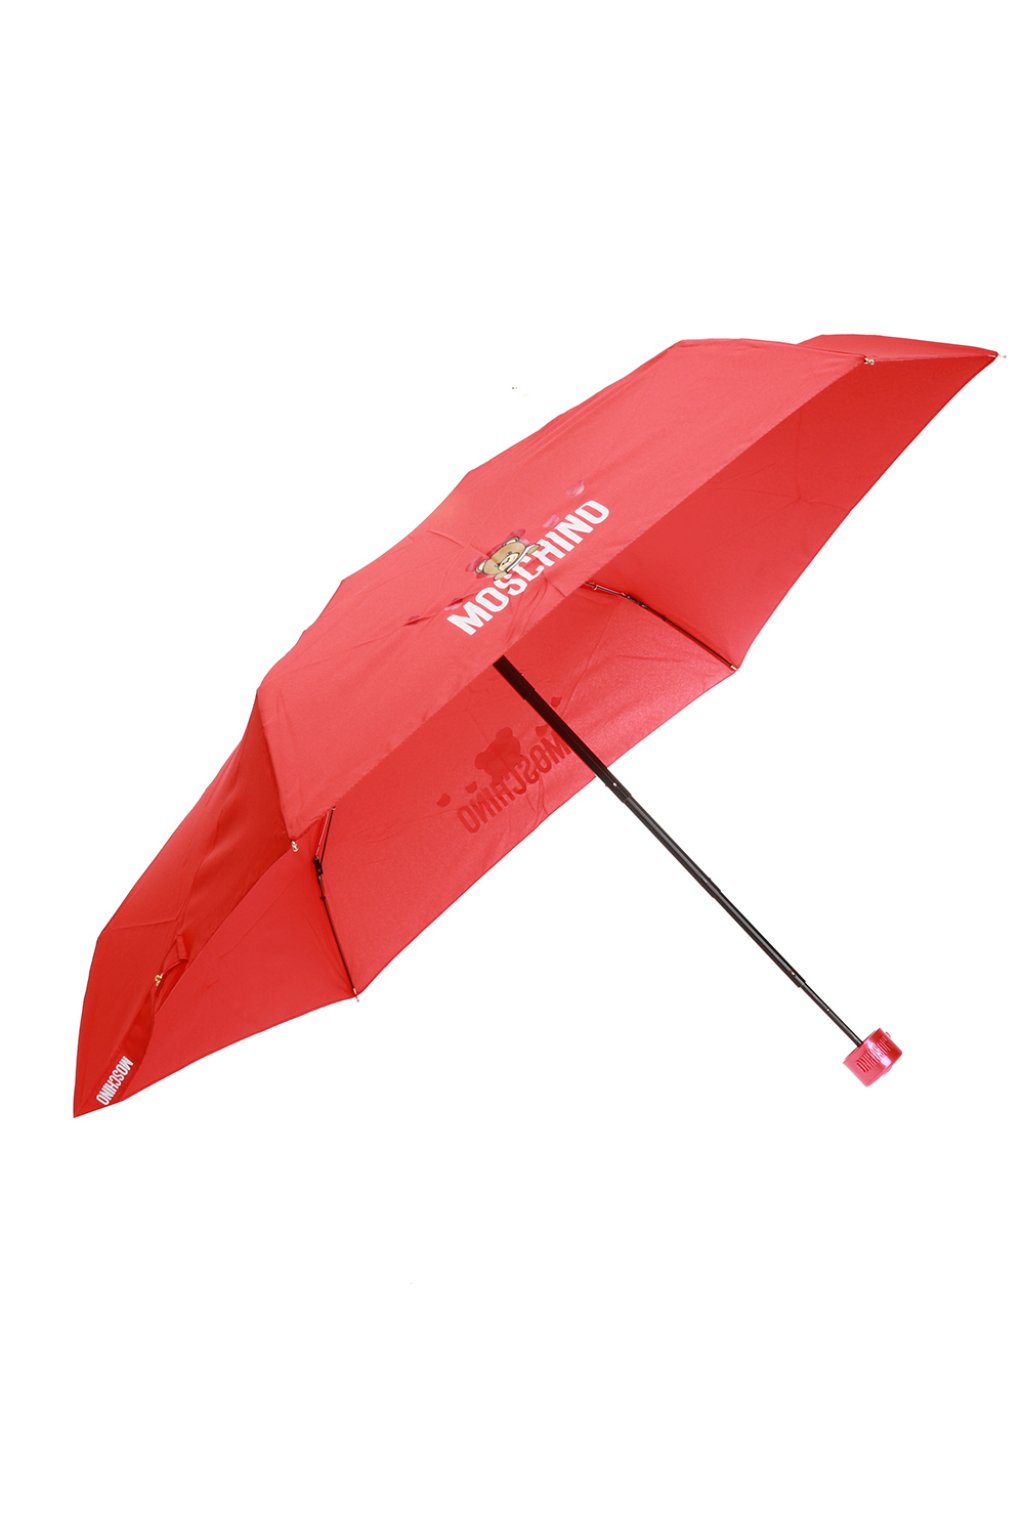 moschino umbrella price